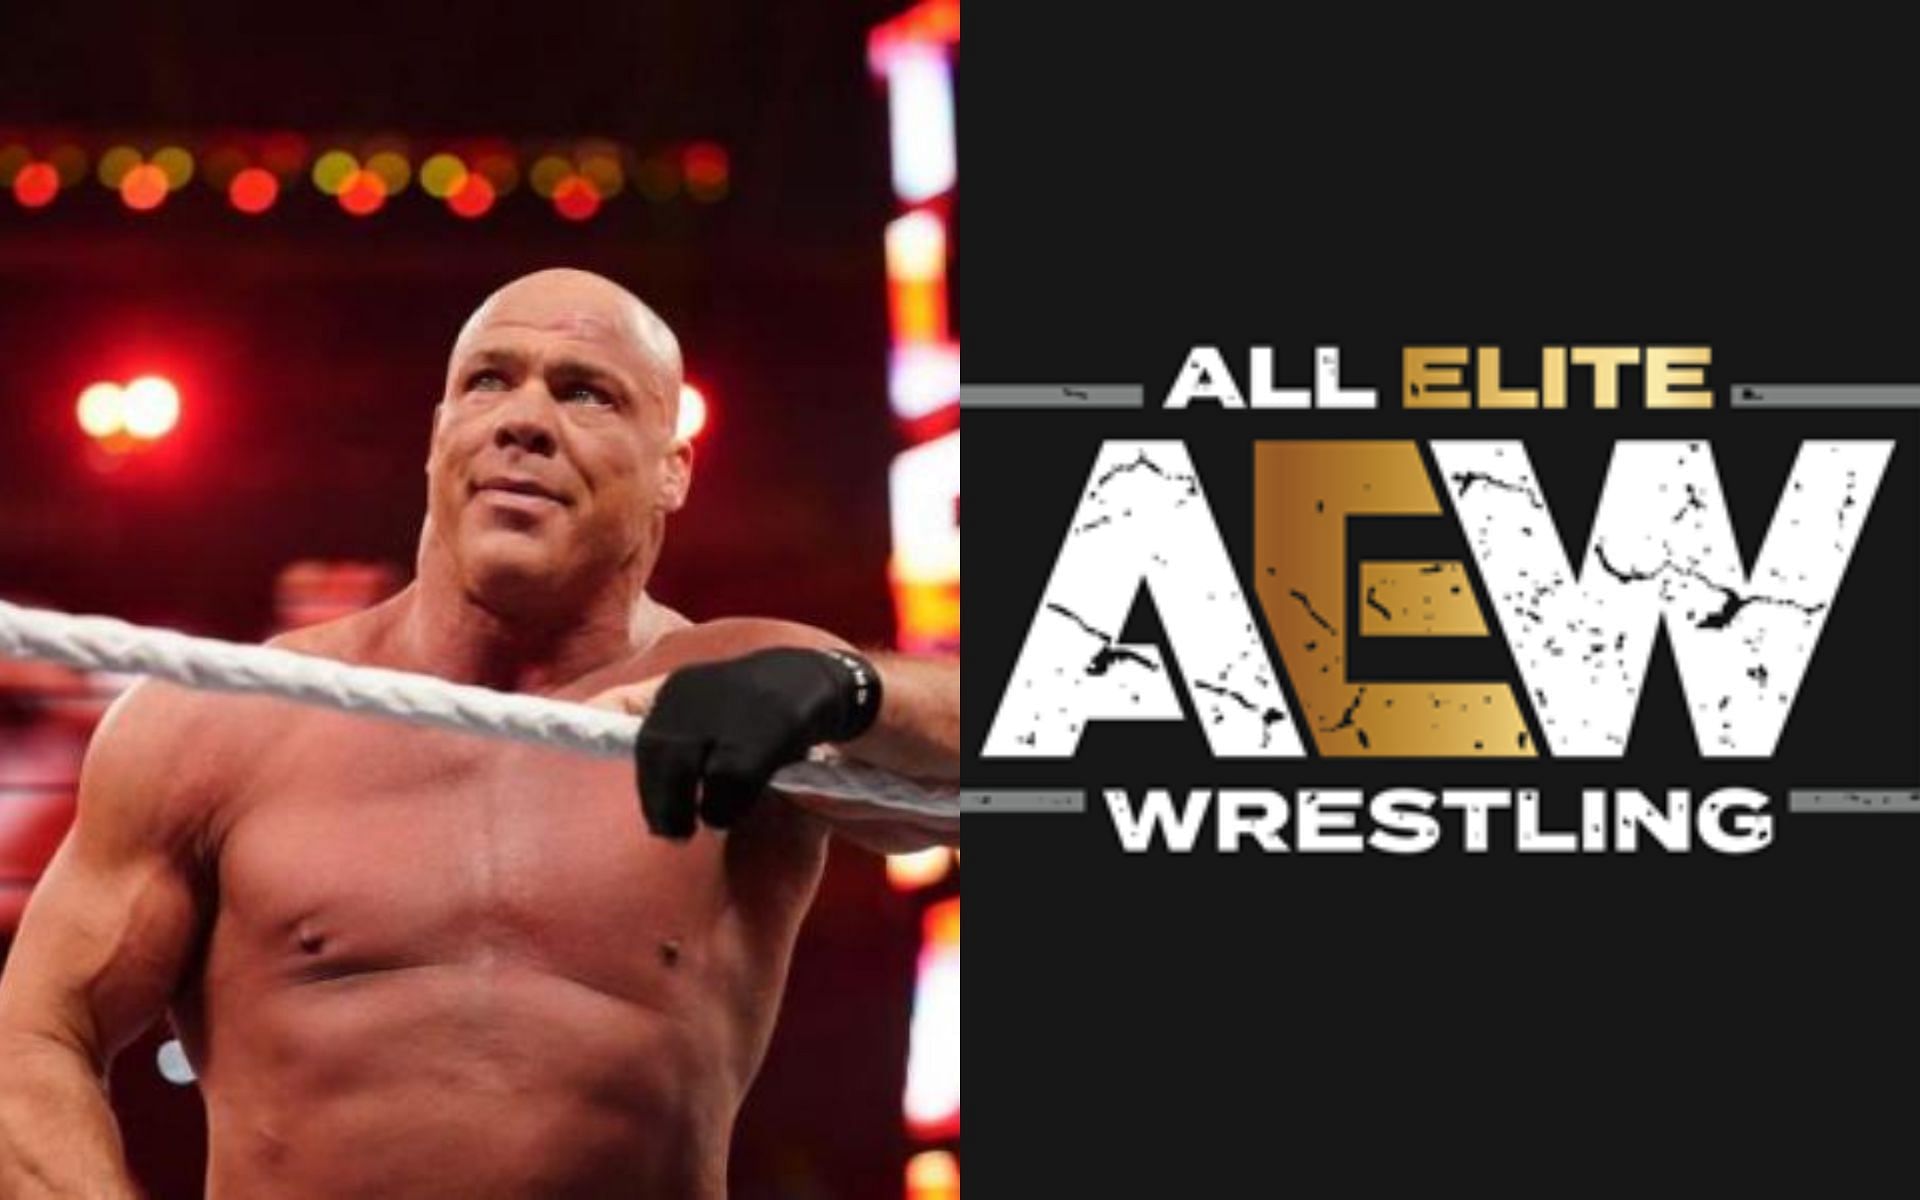 WWE legend Kurt Angle (left) and AEW logo (right)